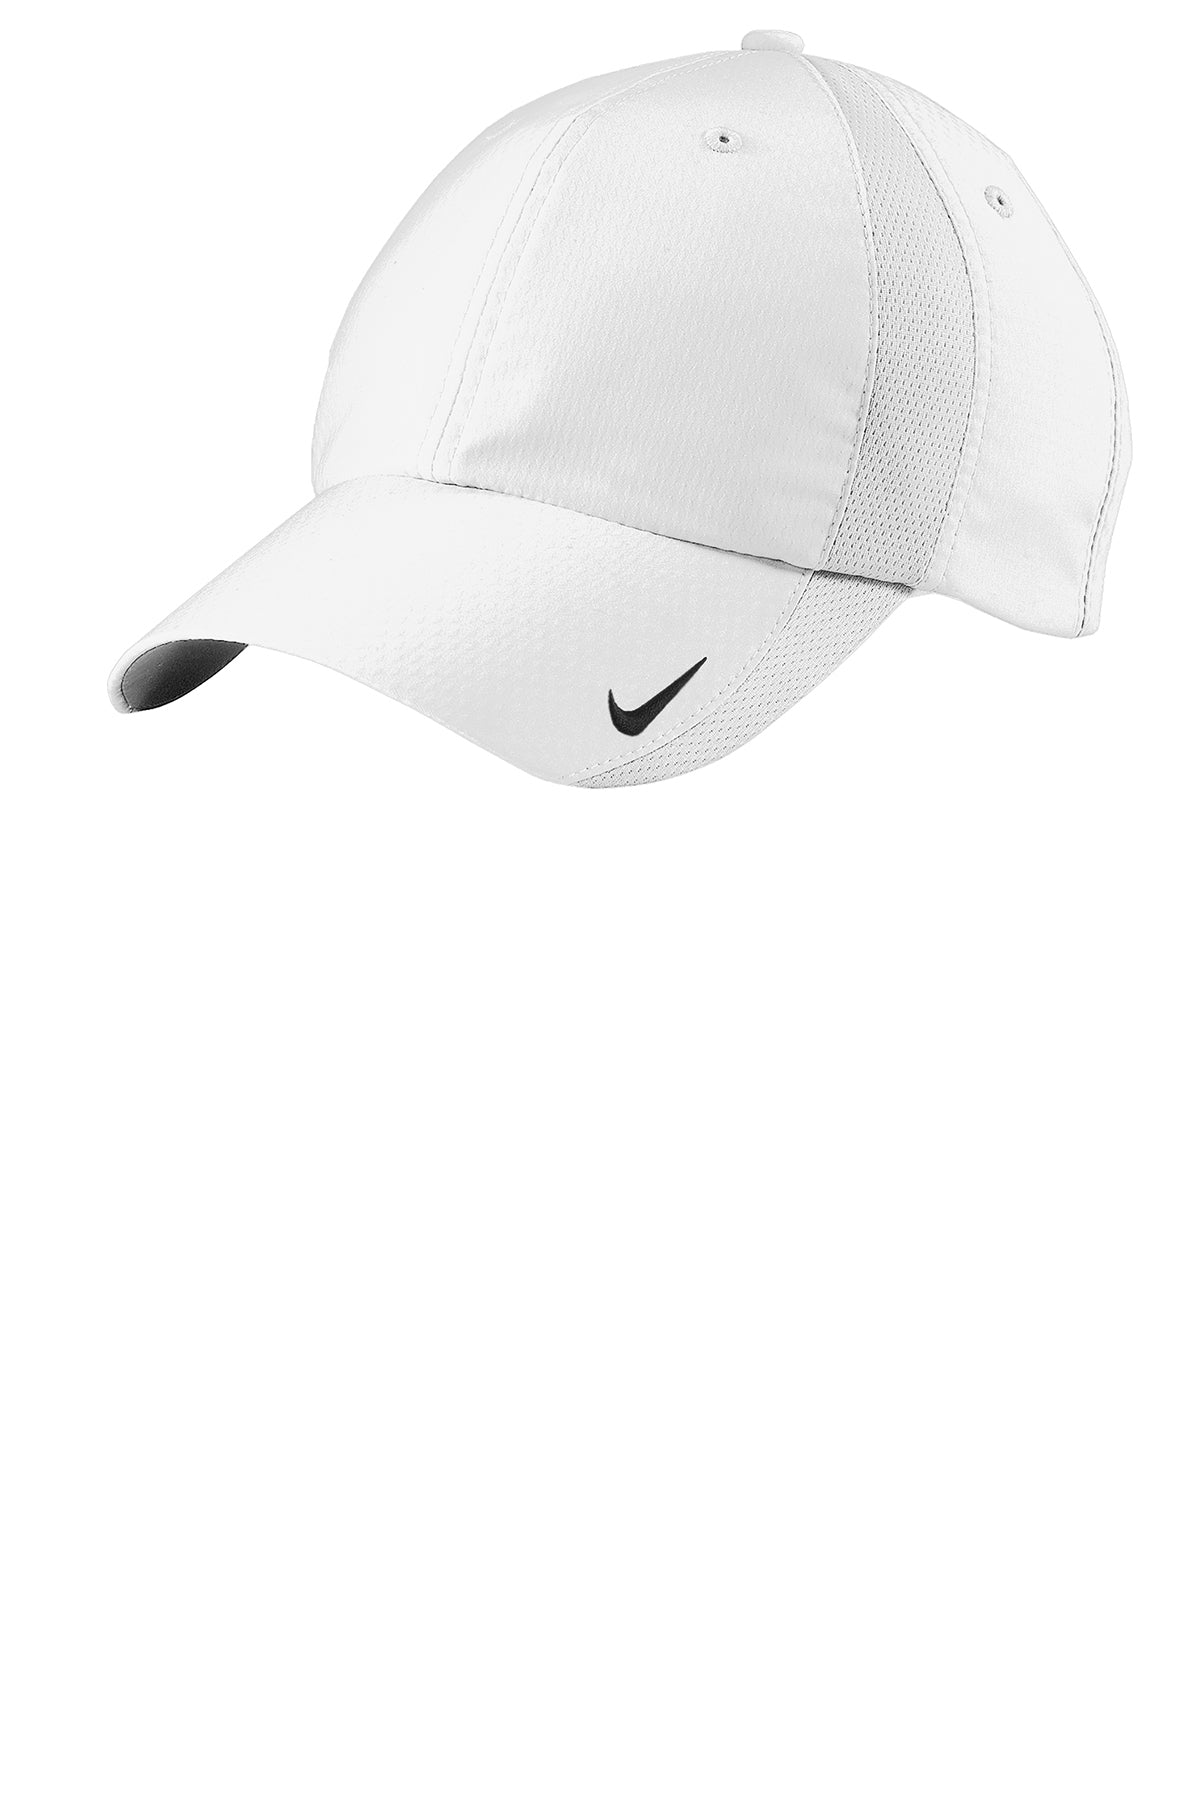 Nike Sphere Dry Custom Caps, White